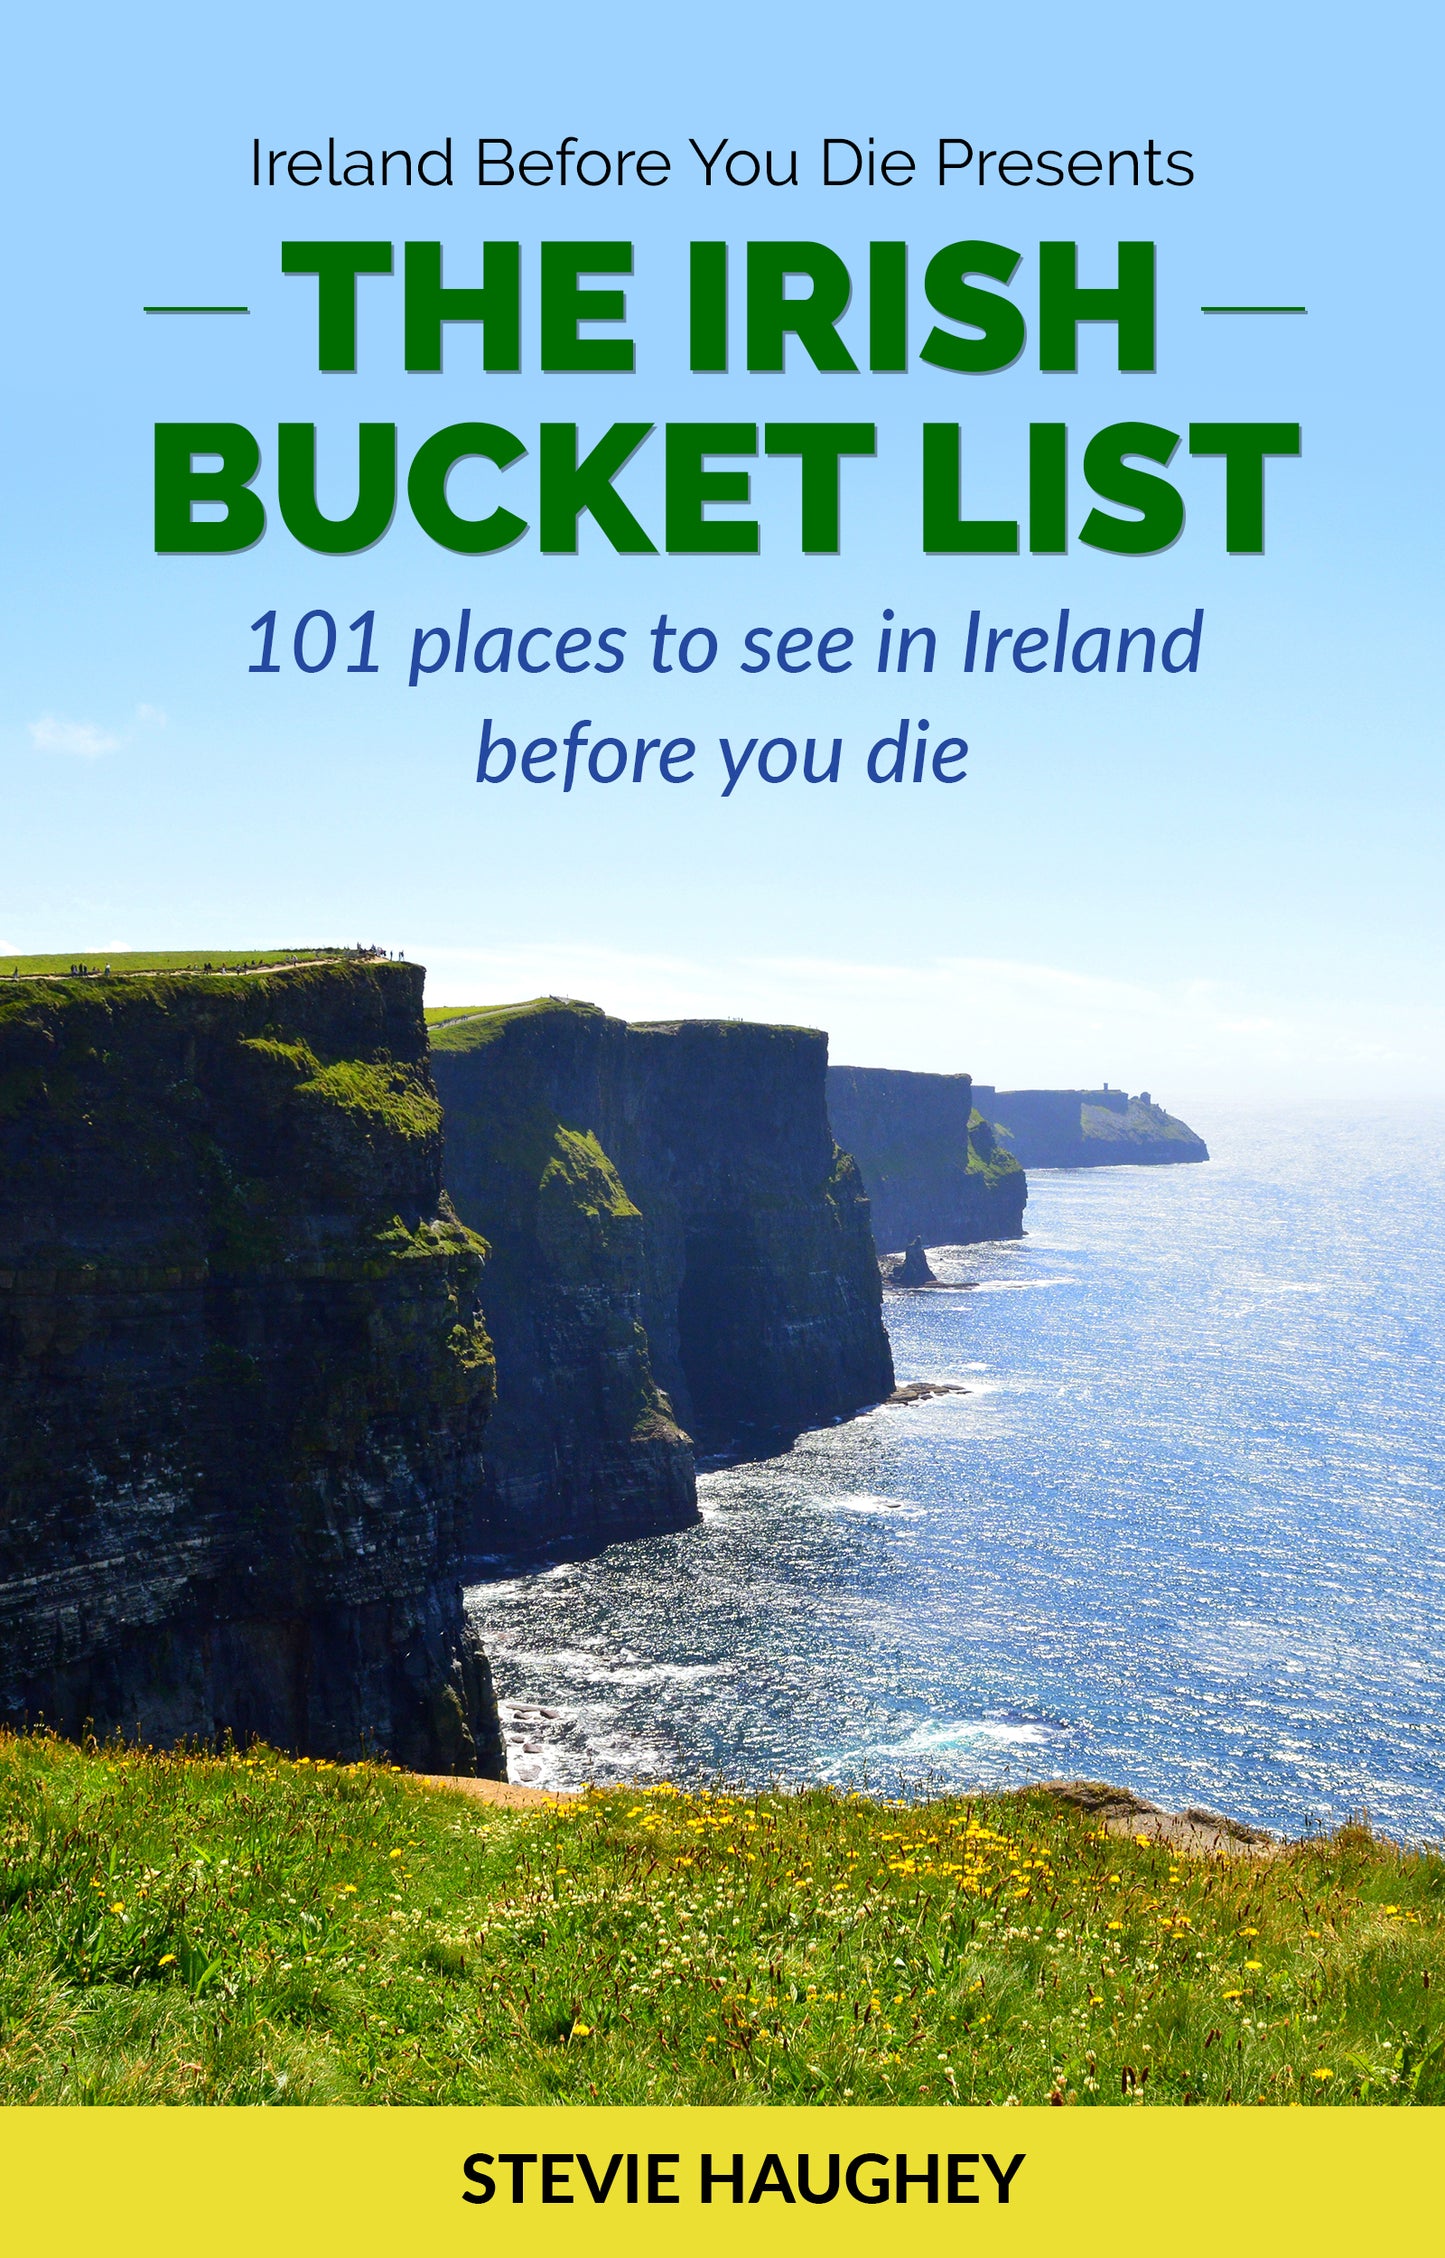 The Irish Bucket List (eBook) - IB4UD Shop - Irish T-Shirts, Clothing & More